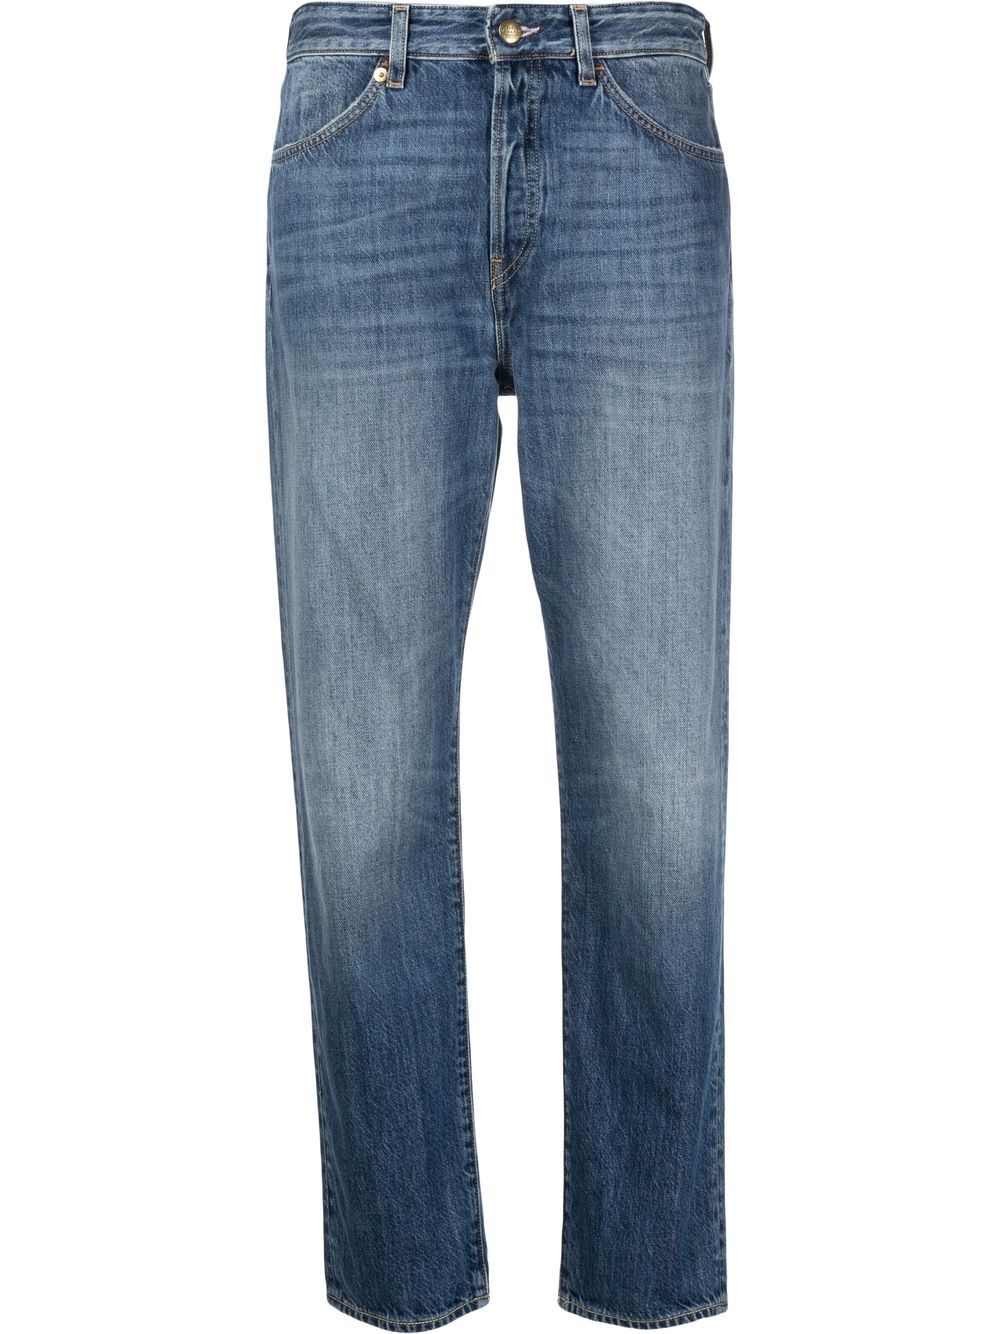 Washington Dee Cee Ranch straight-leg jeans